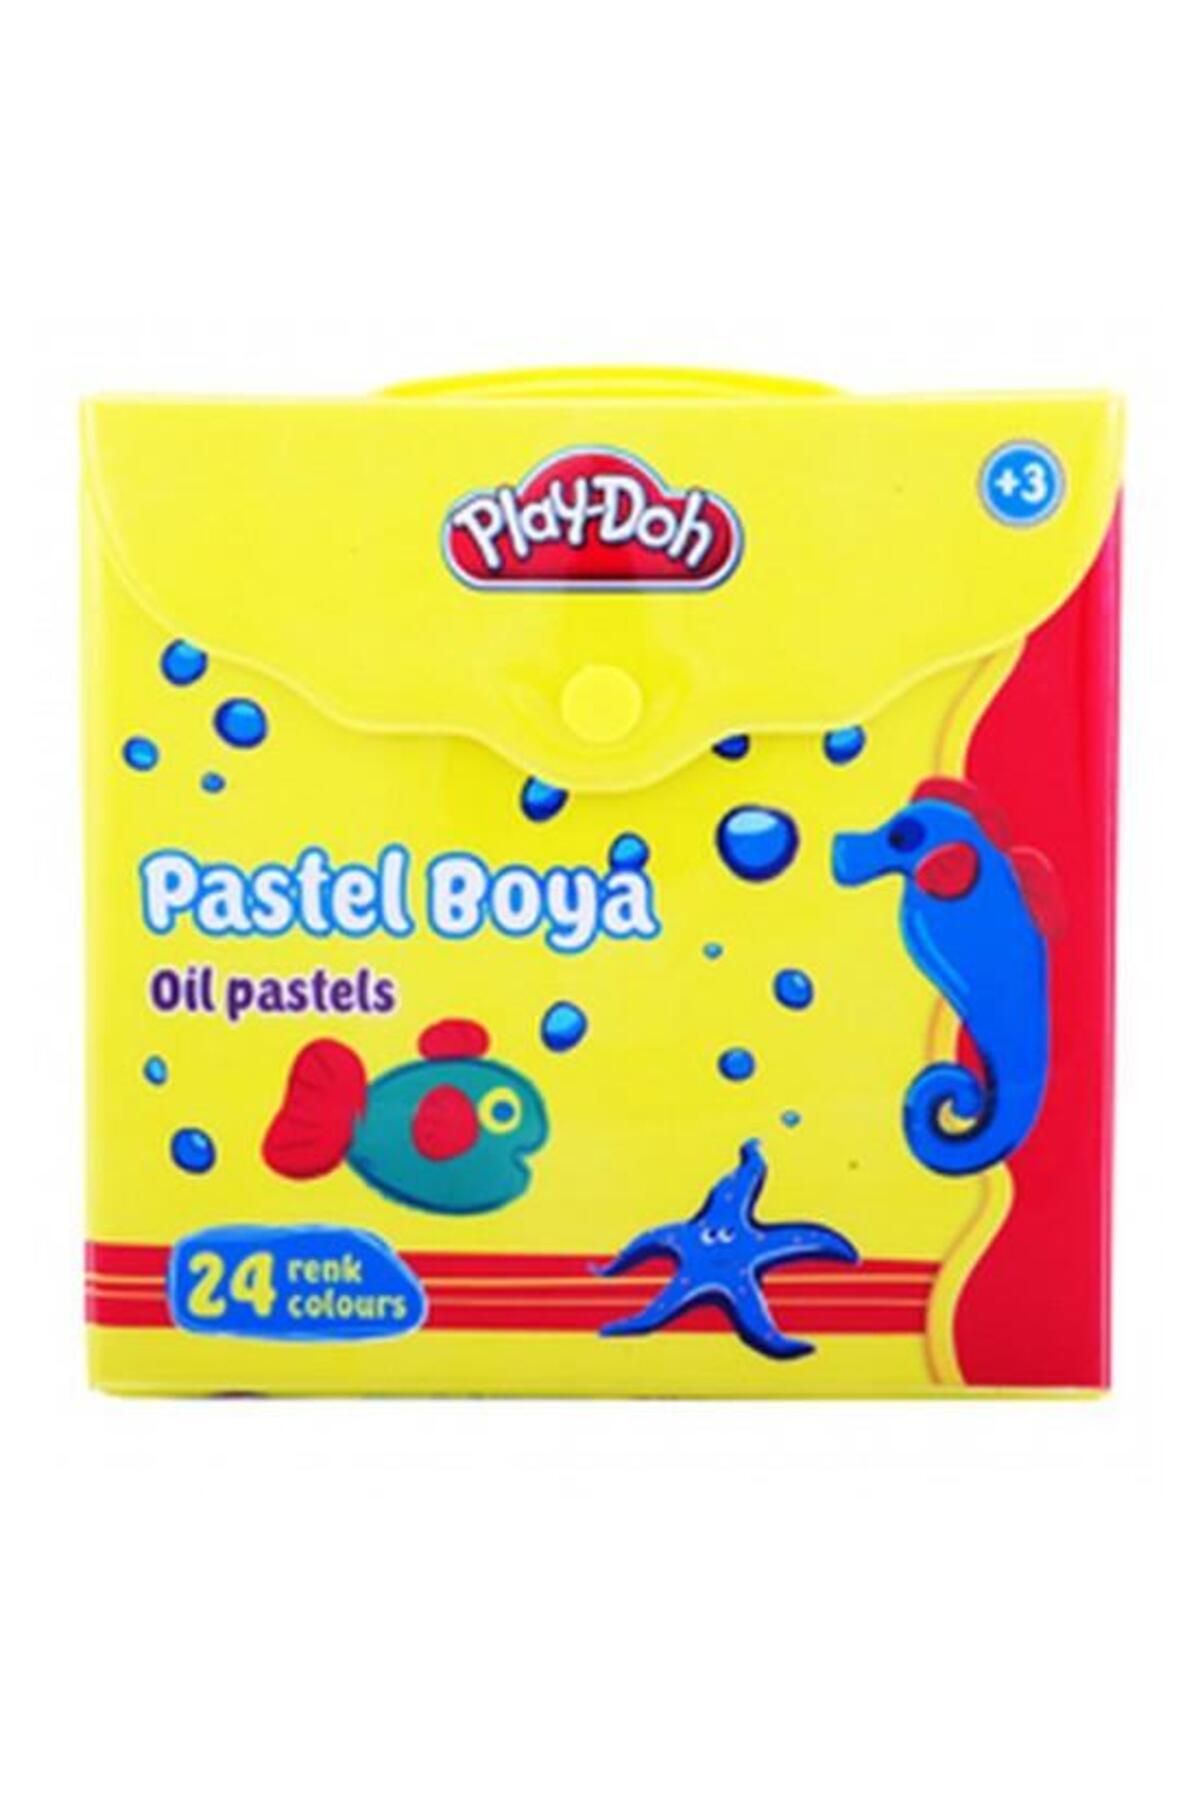 Play Doh Play-doh Pastel Boya Çantalı 24 Renk